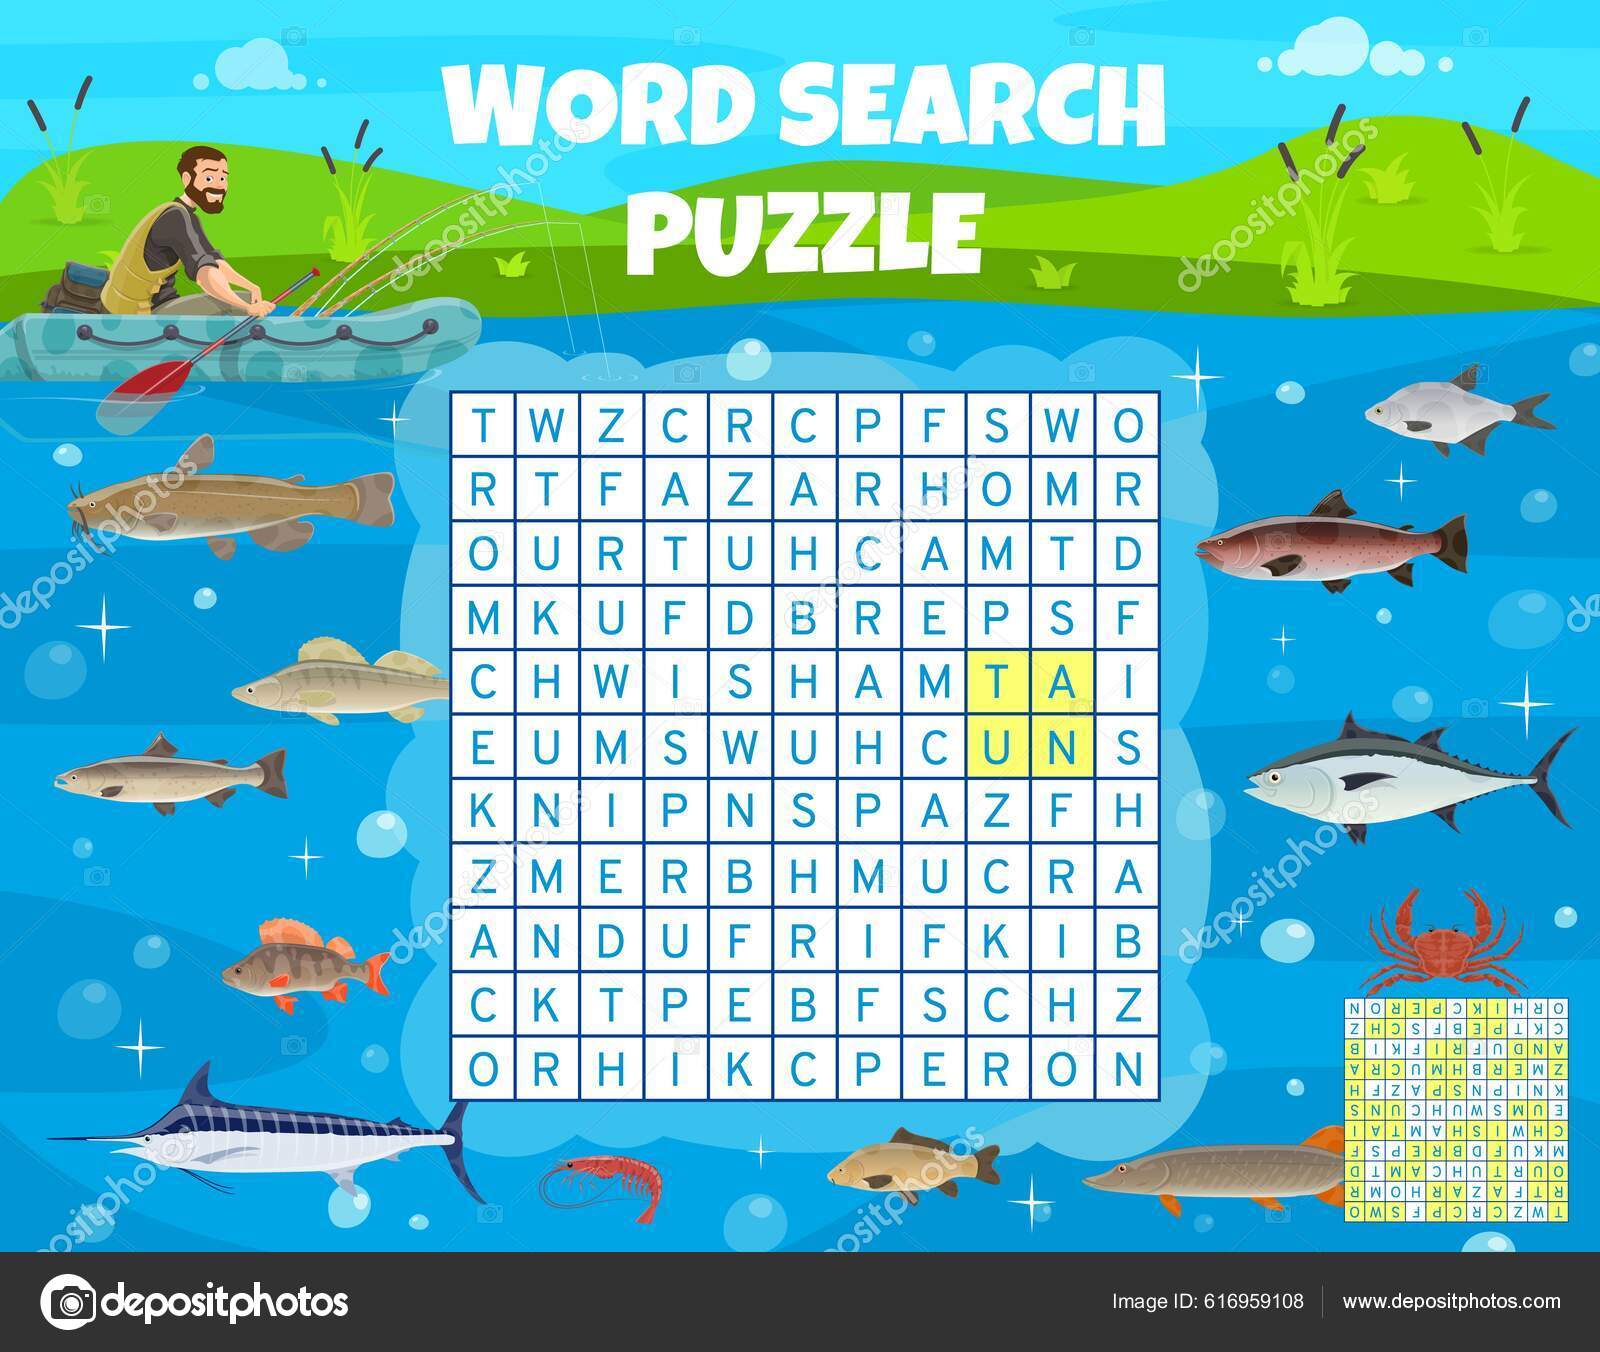 pike like fish crossword clue